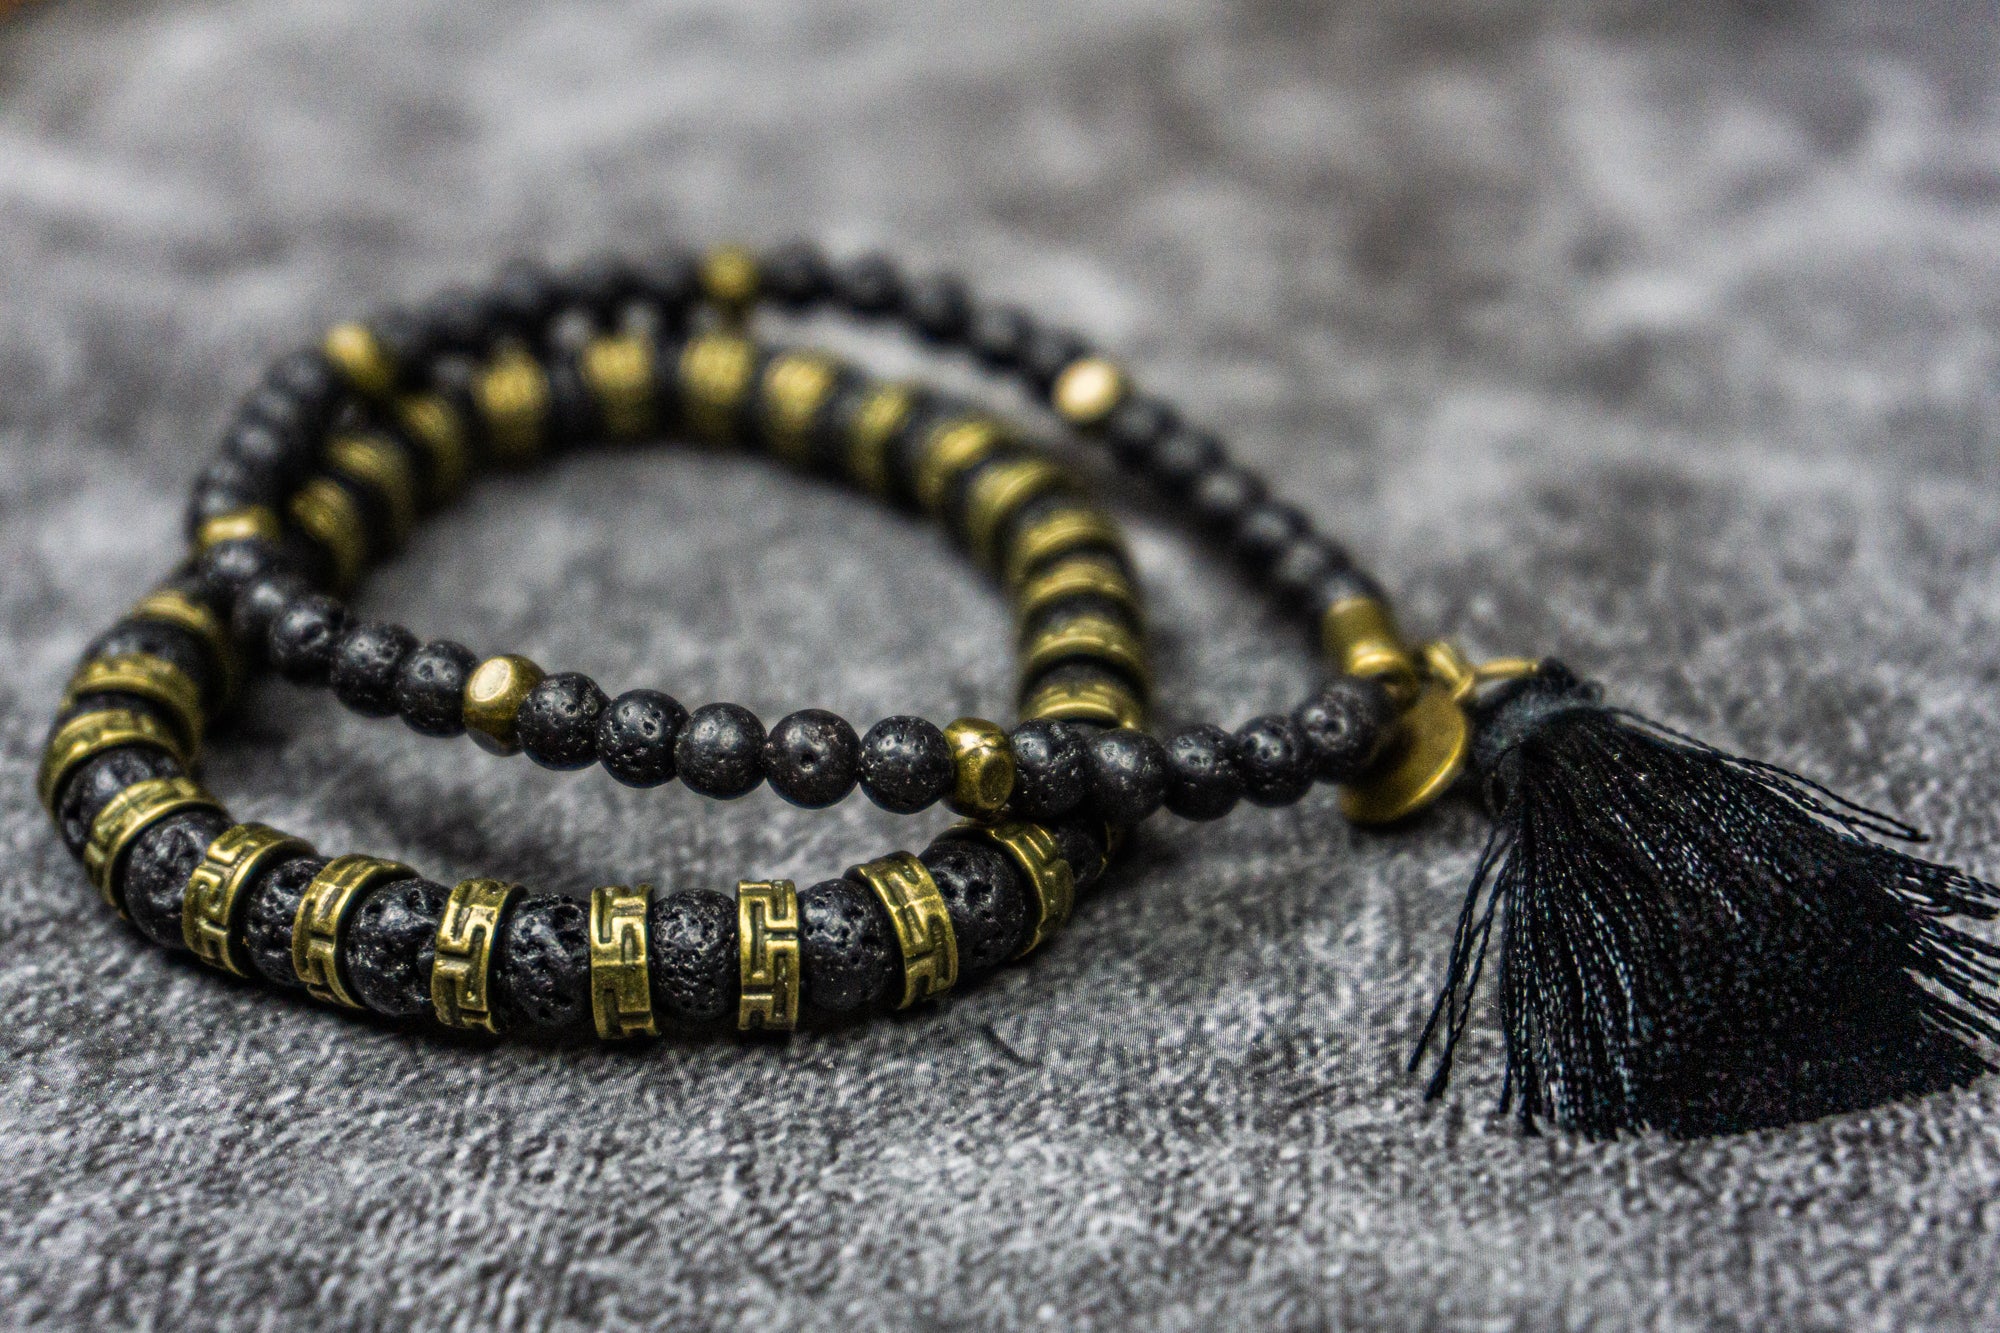 Black Lava Rock, Onyx & Coconut Bracelet Set